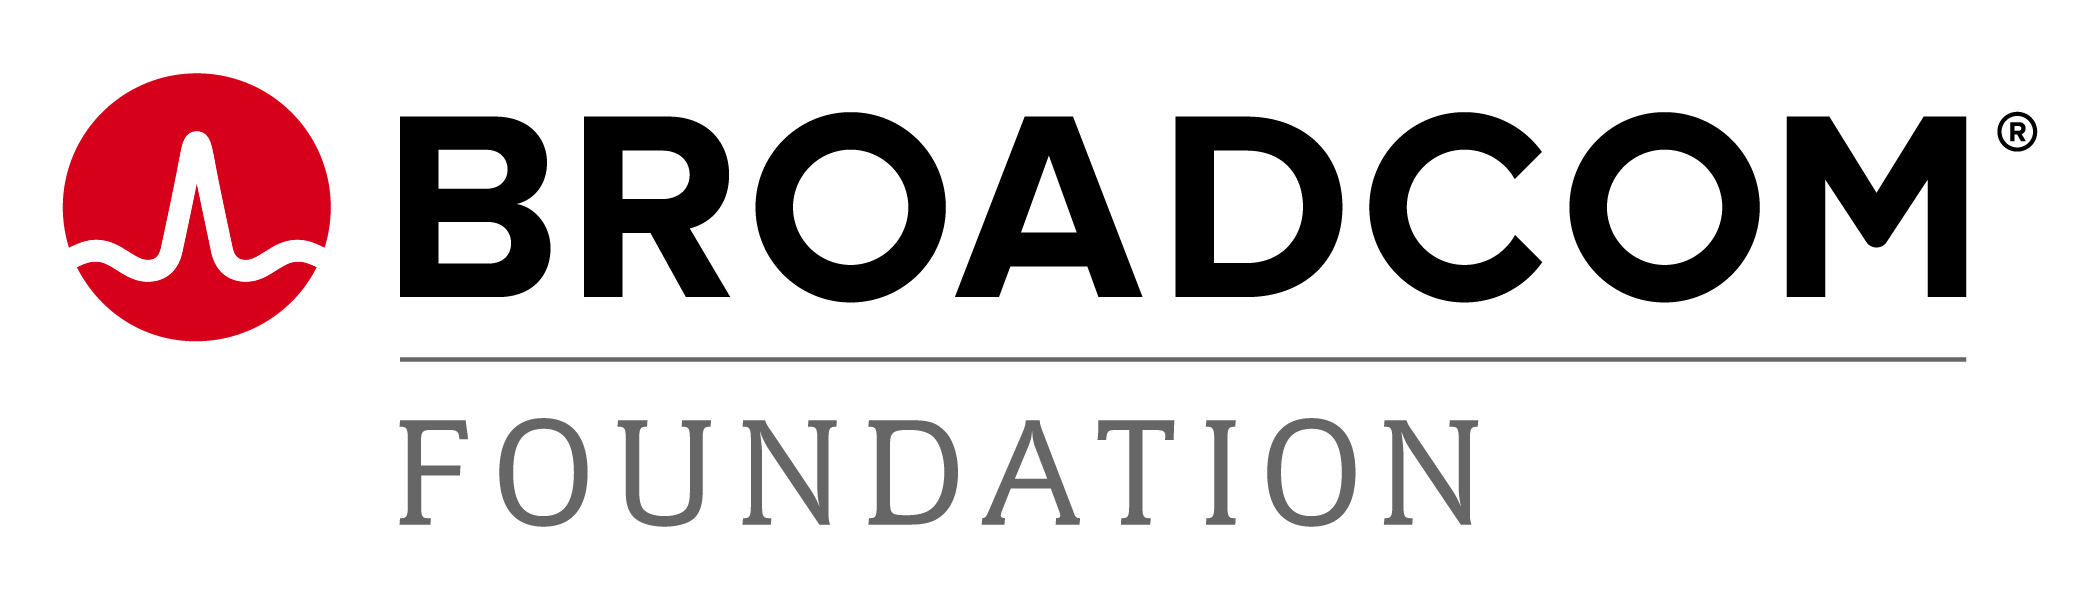 broadcom_foundation_logo_cmyk.jpg